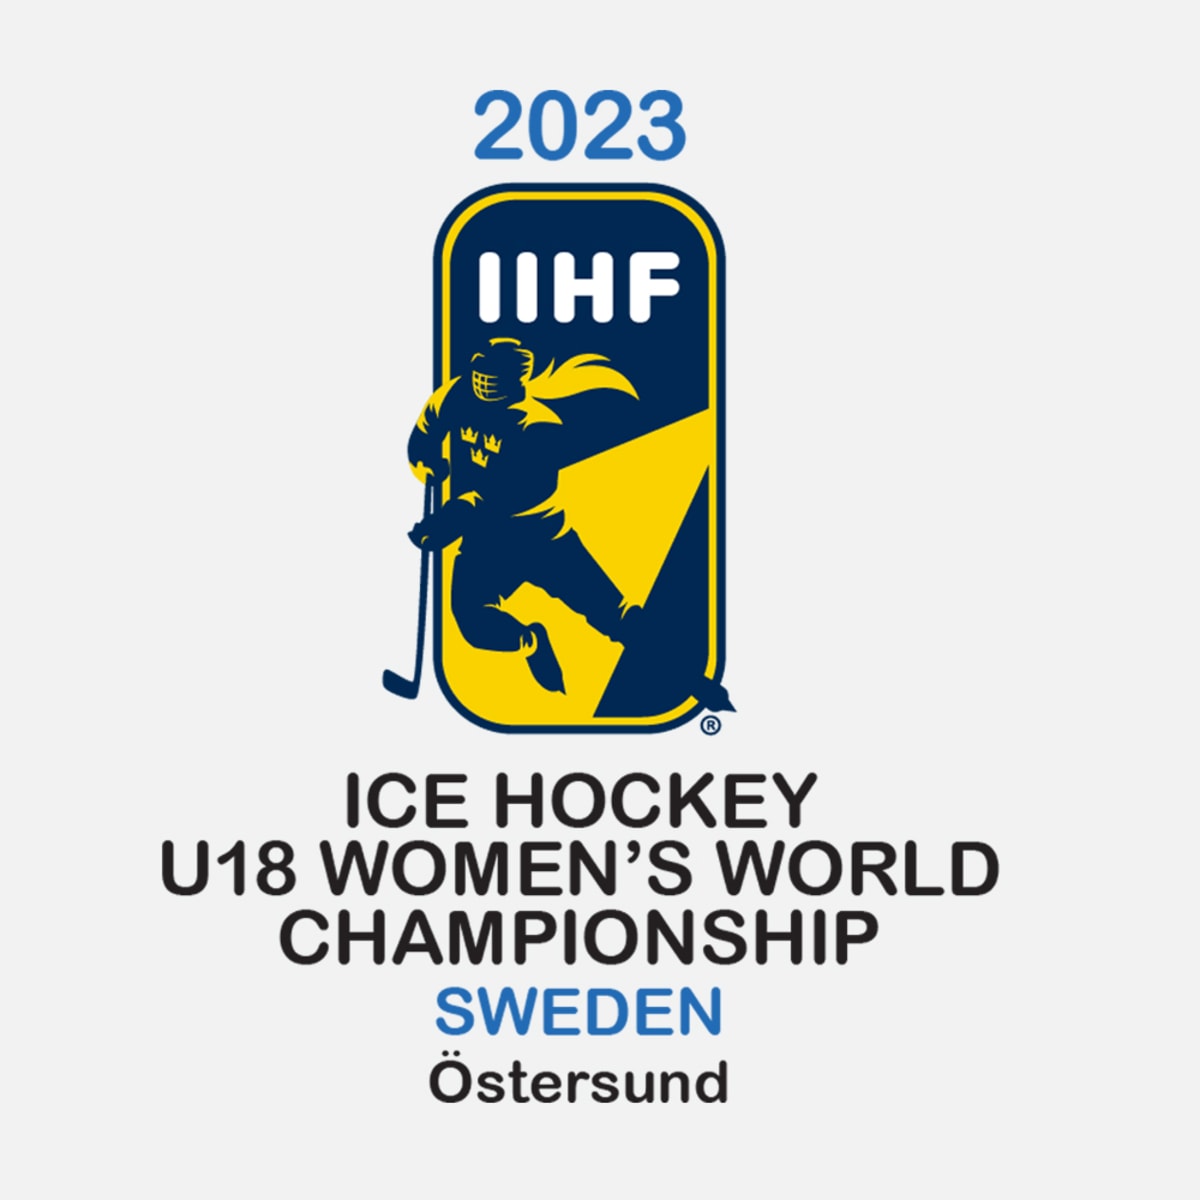 Canada Wins Gold at the U-18 World Championship - The Hockey News